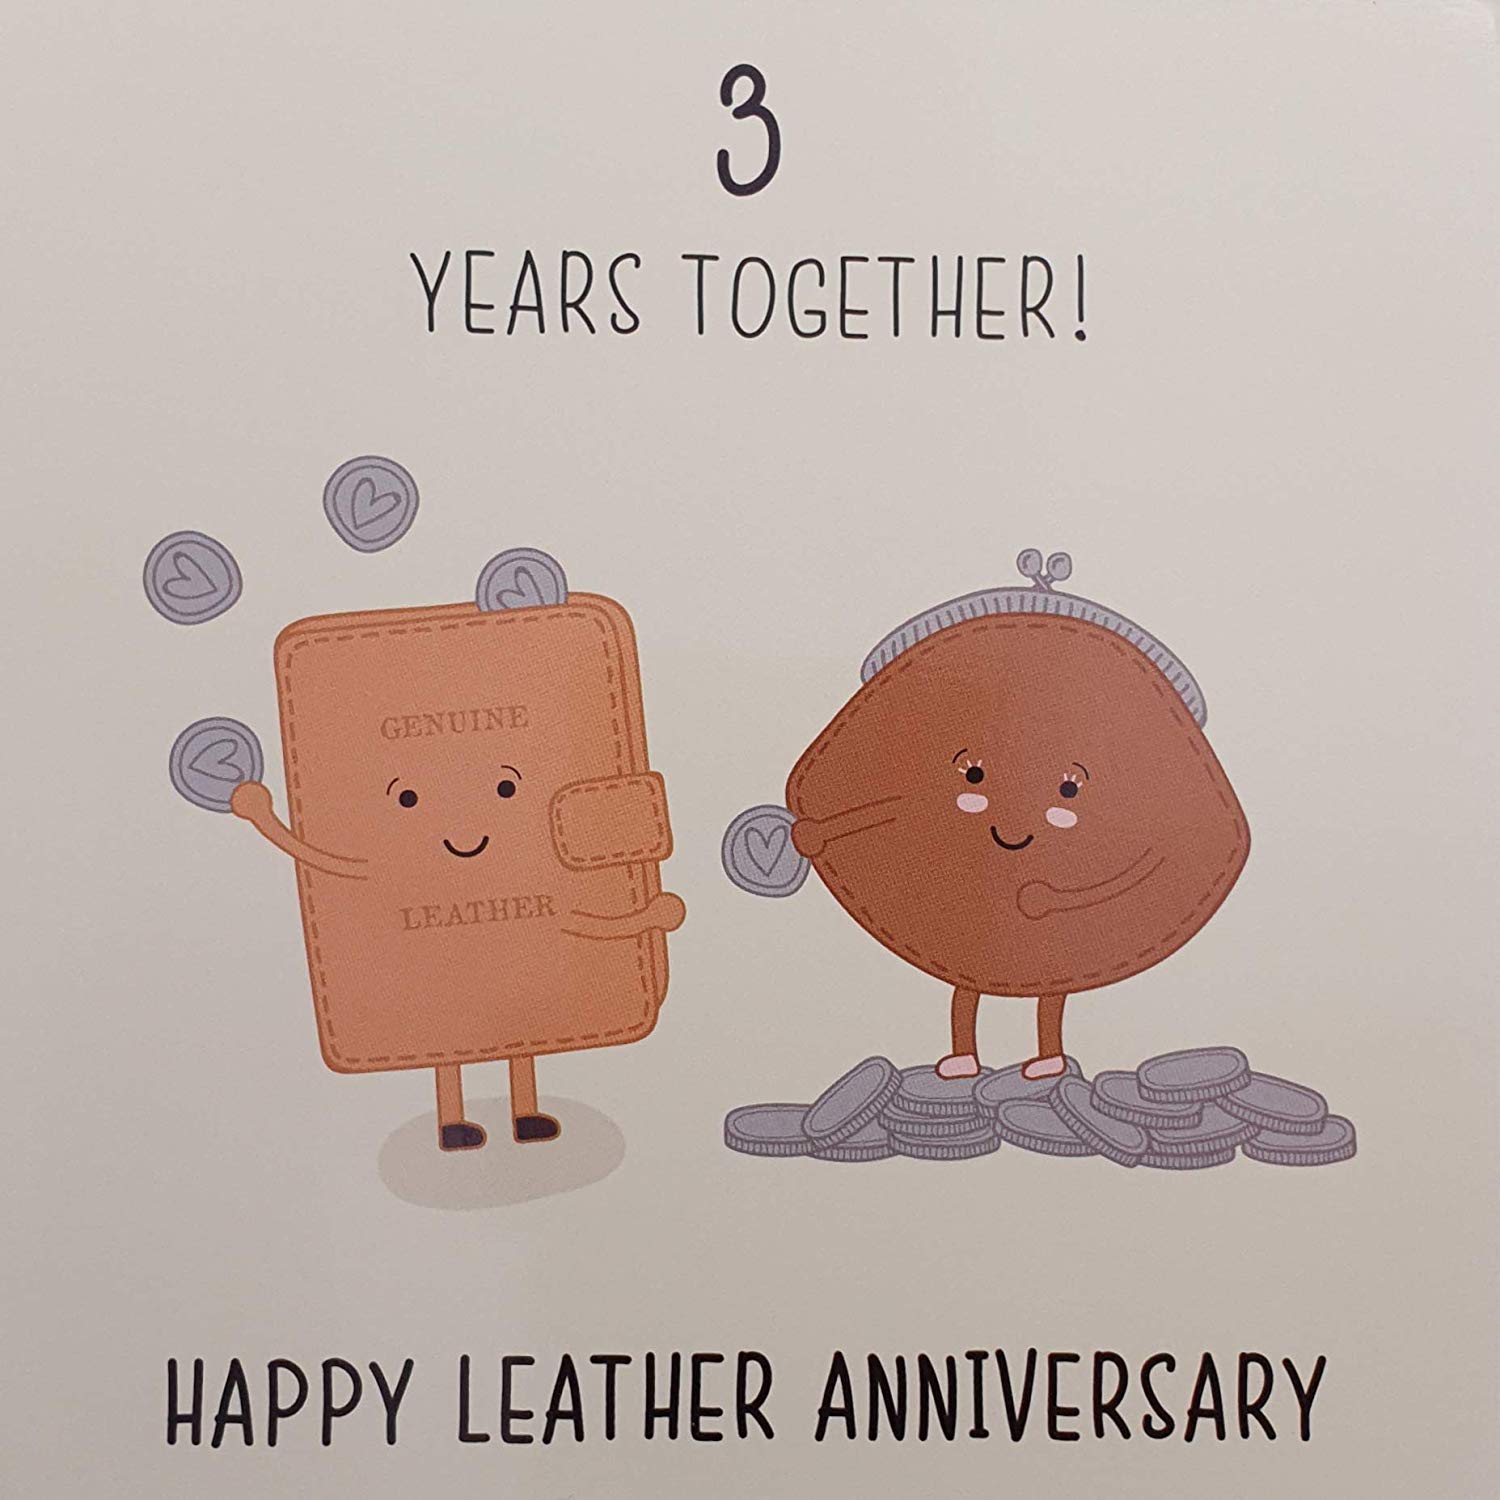 3rd Wedding Anniversary Card - Leather Anniversary